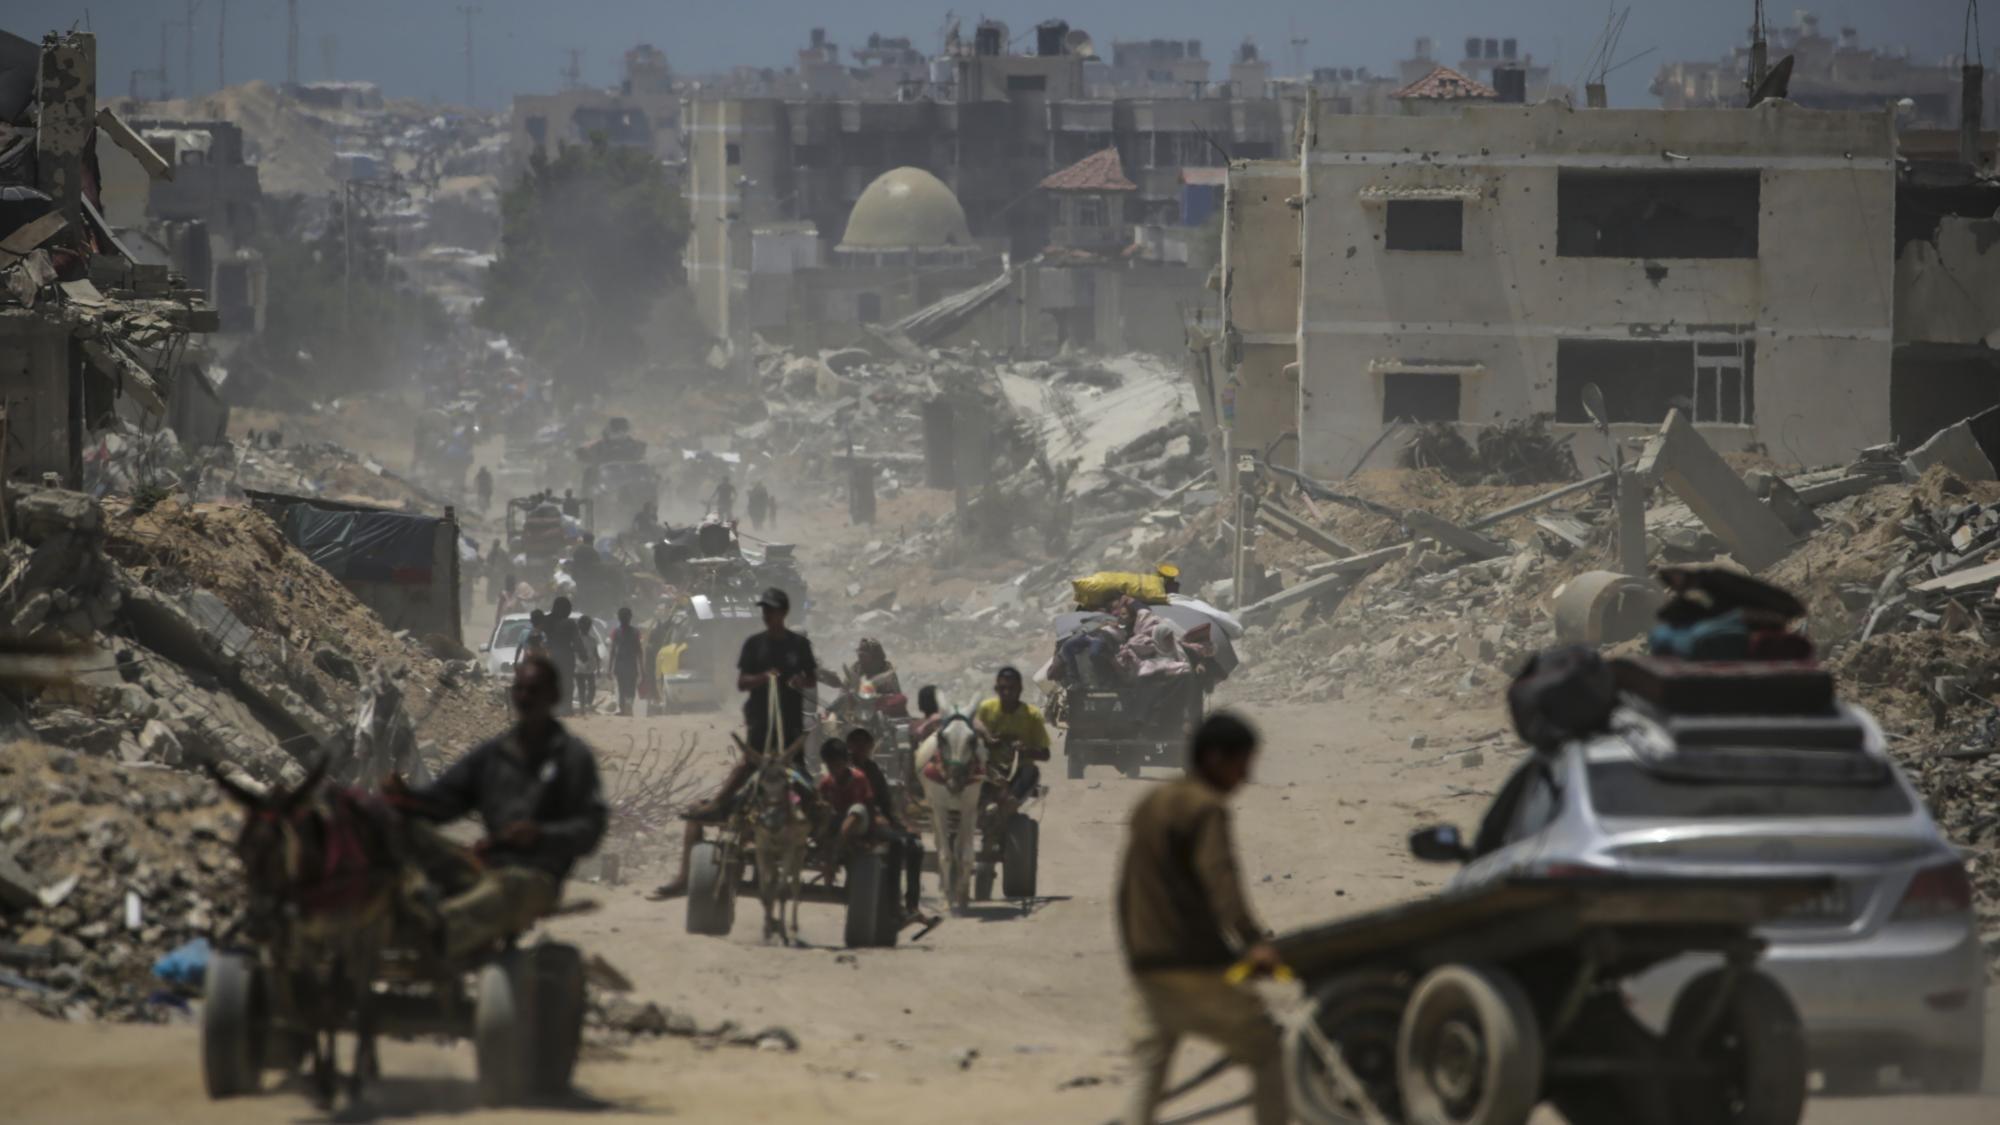 Gazans seek shelter as Khan Younis exodus continues